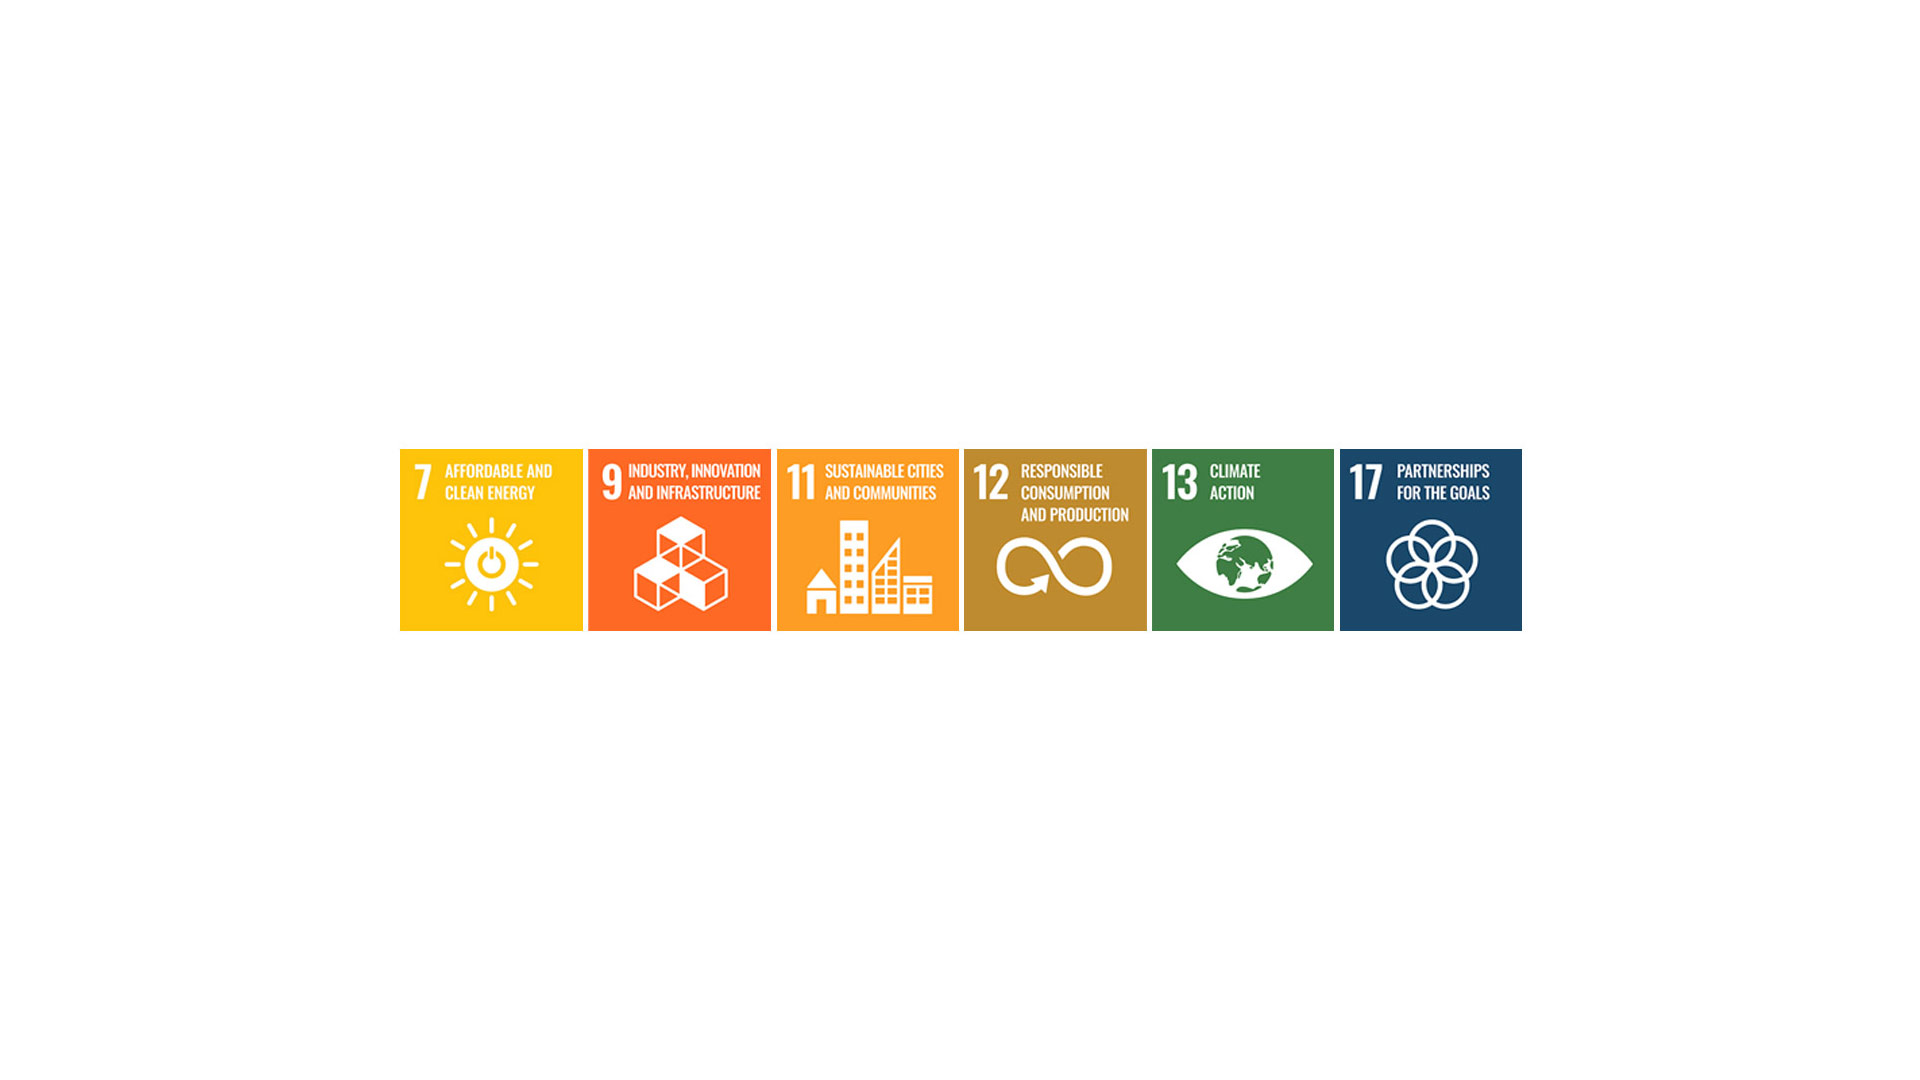 Sustainable Development Goals, logo